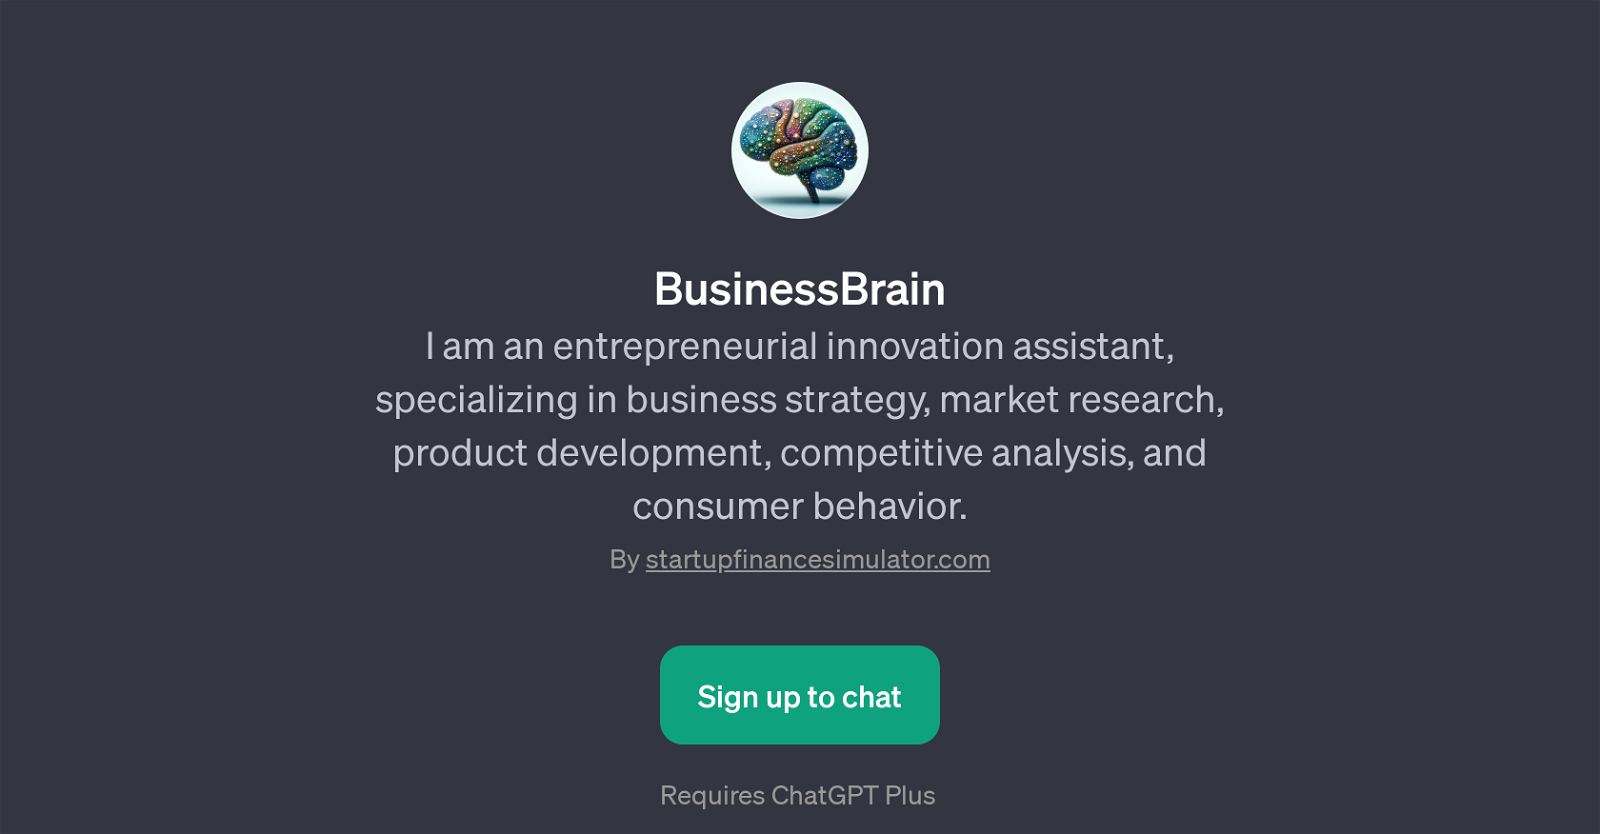 BusinessBrain website